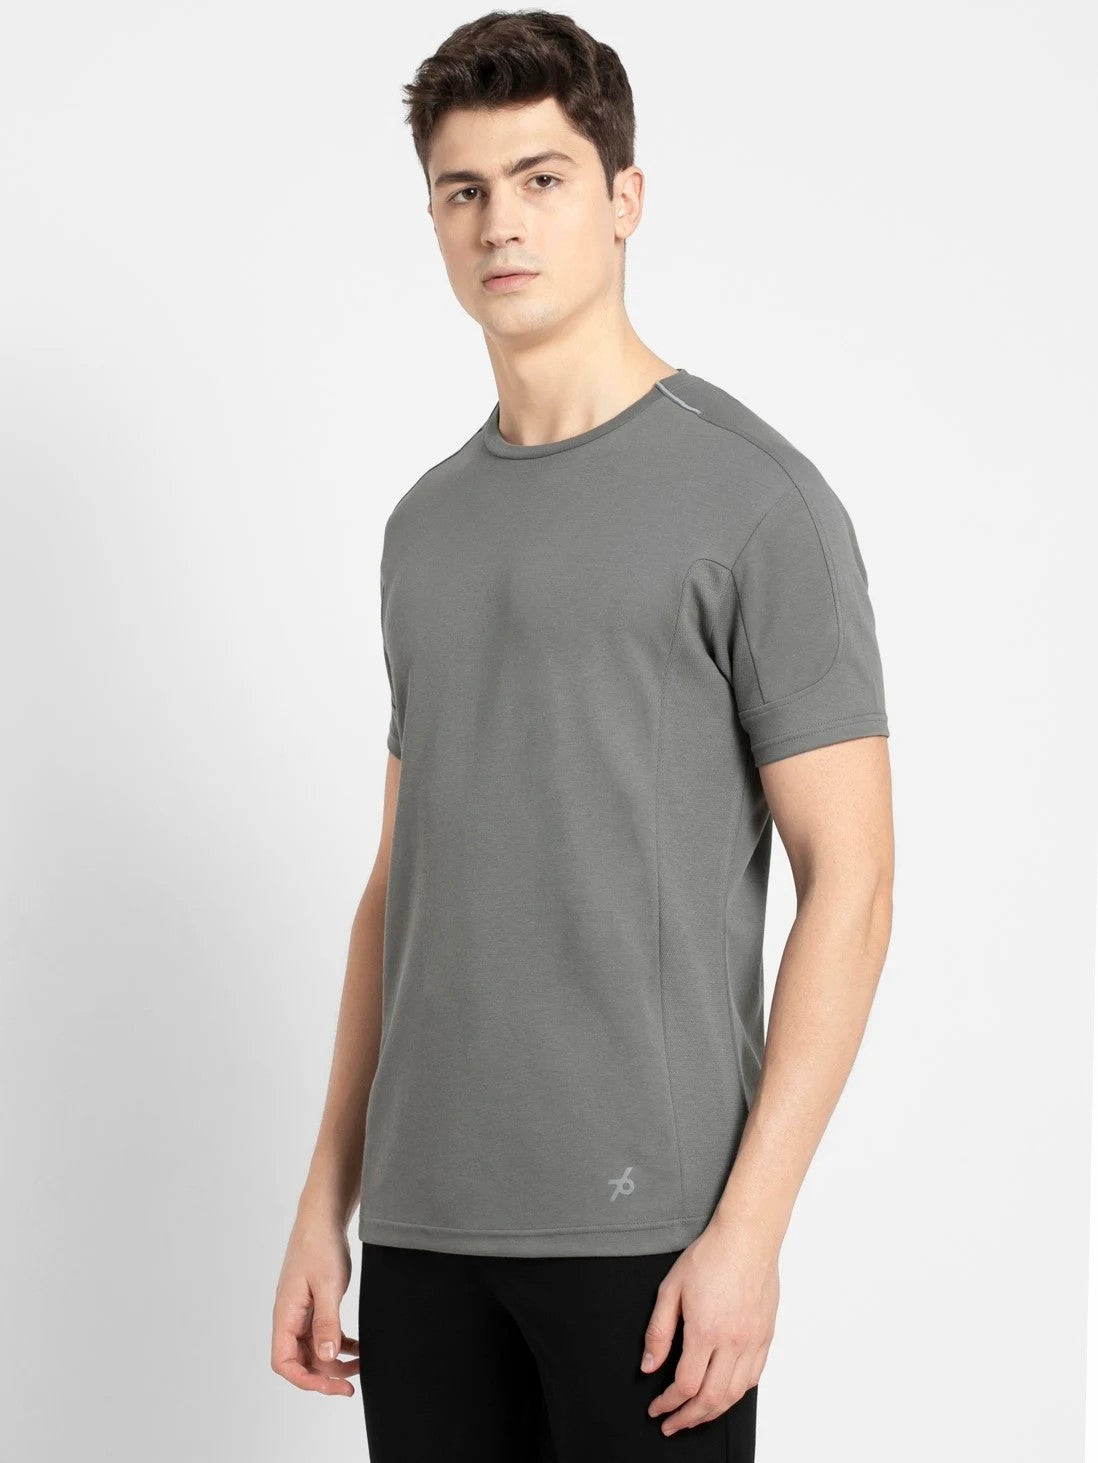 Men's Quiet Shade T-Shirt